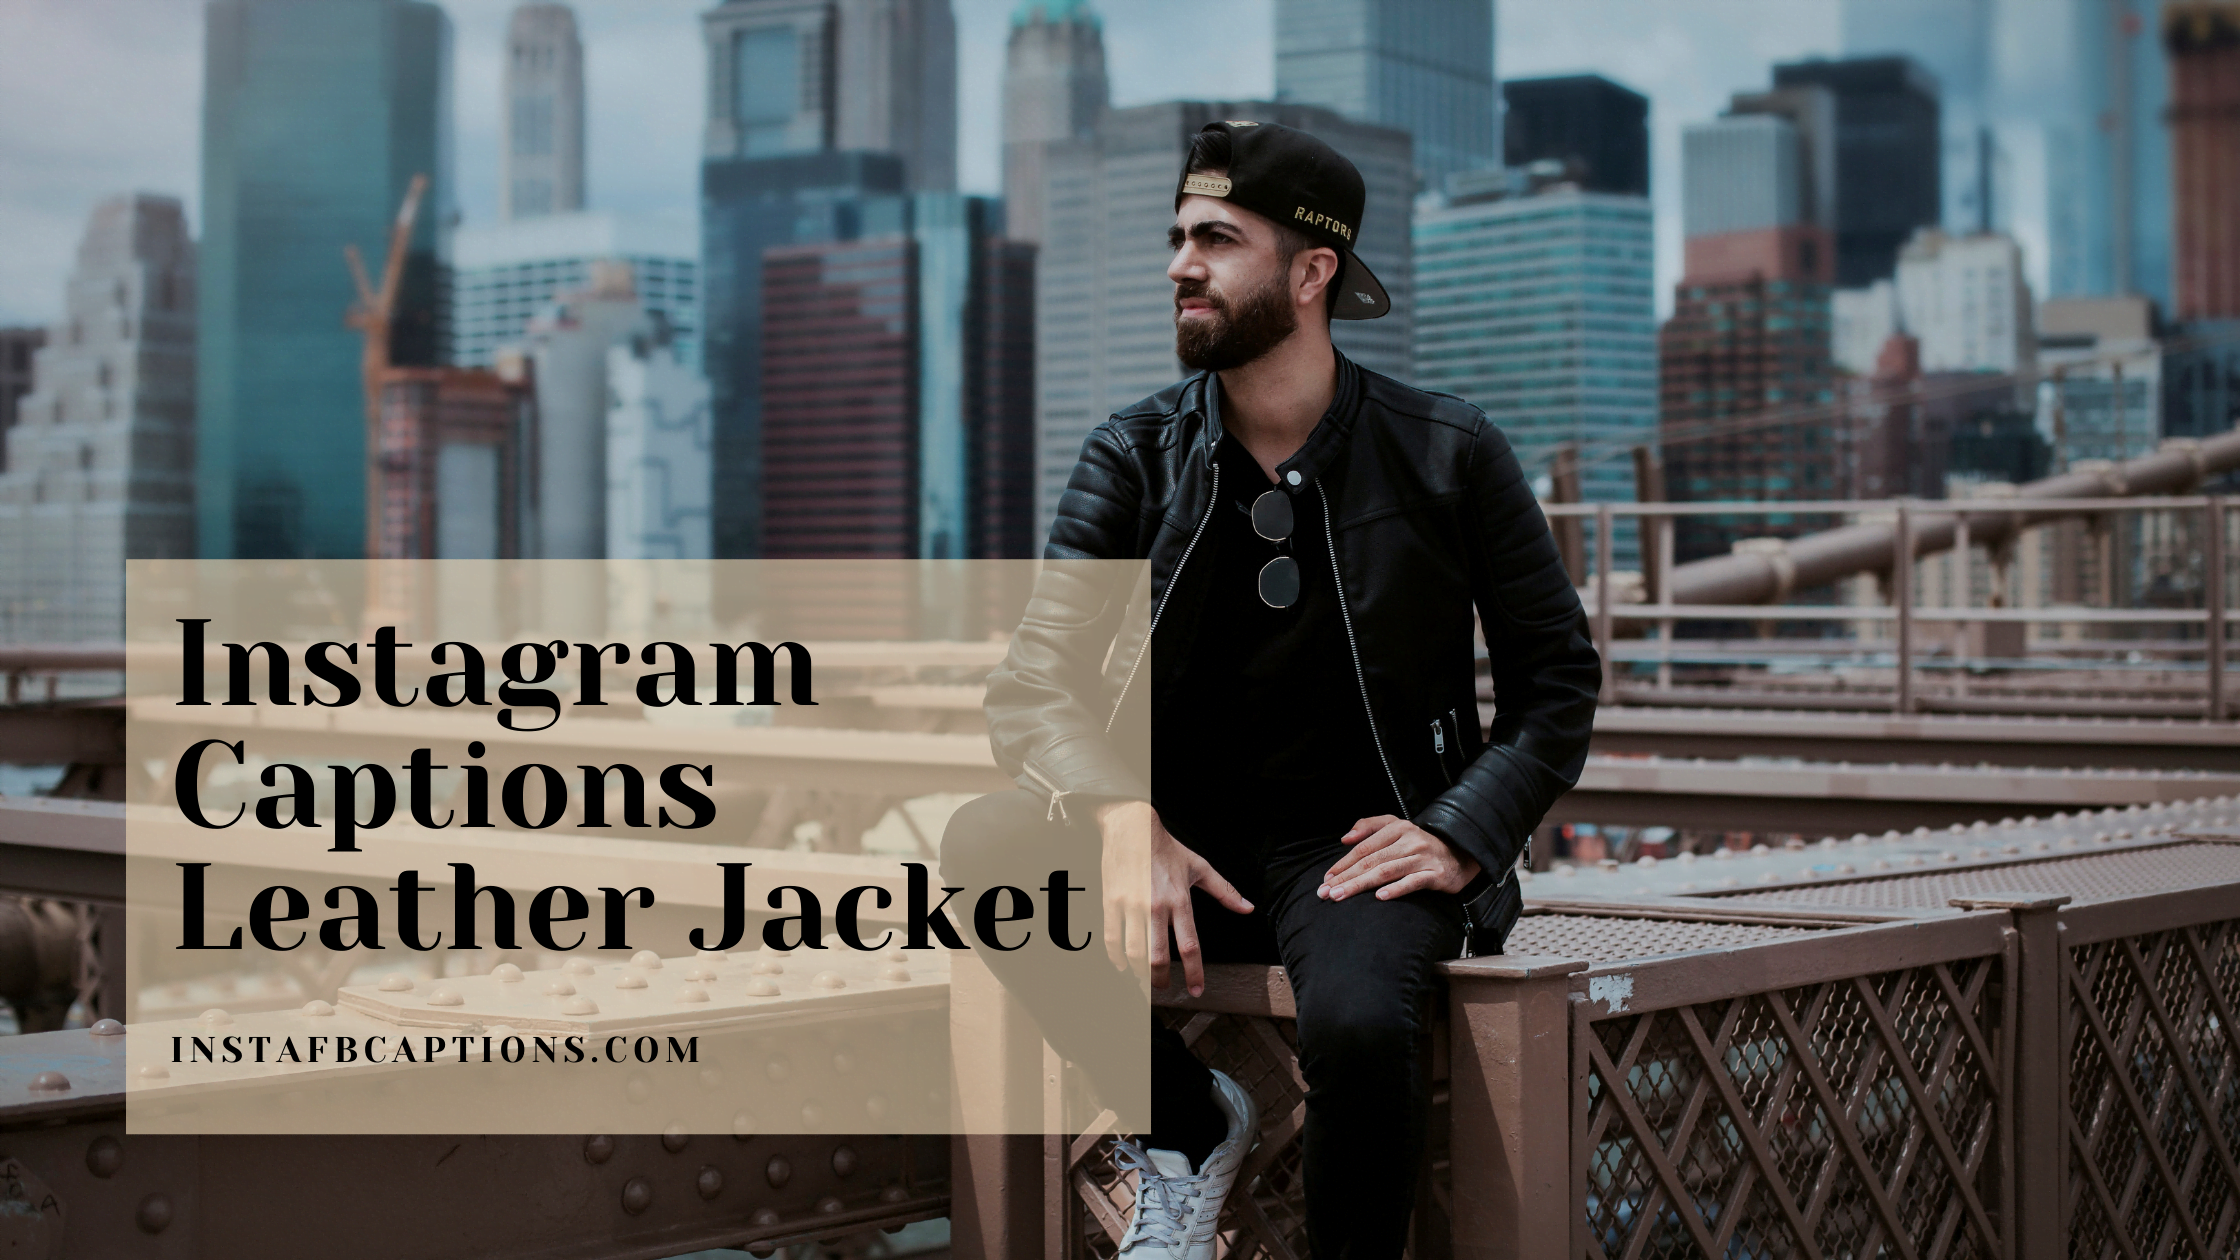 Instagram Captions Leather Jacket  - Instagram Captions Leather Jacket - Leather Jacket Love: Instagram Caption Inspiration